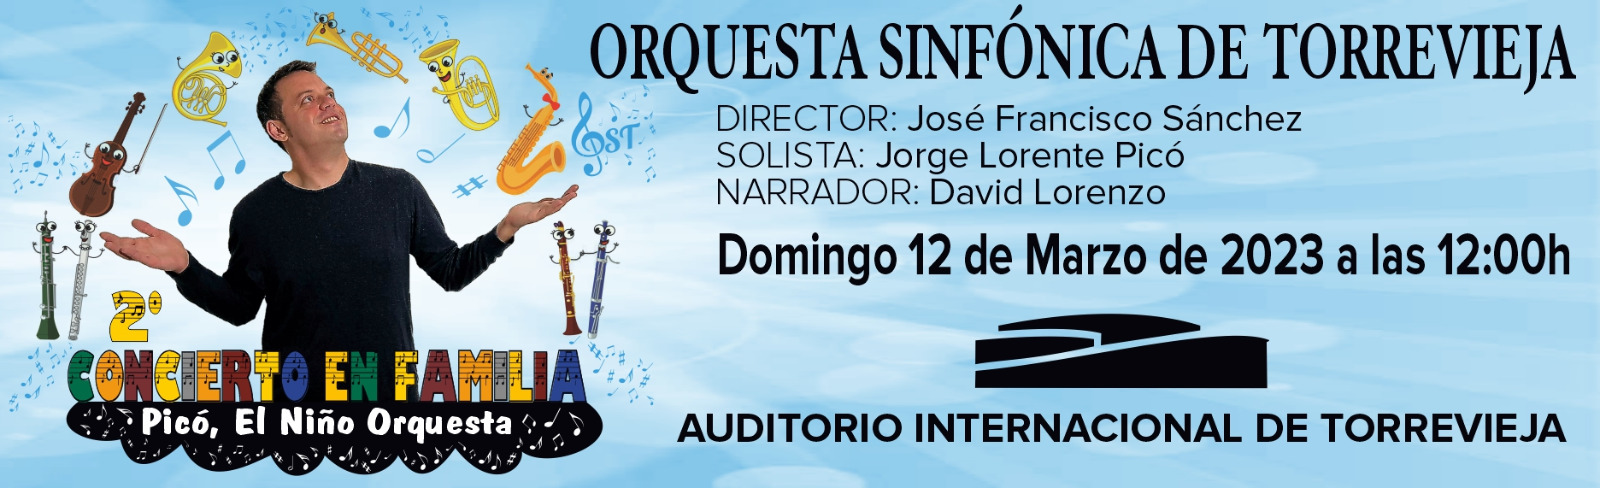 2o-concierto-en-familia-pico-el-nino-orquesta-63e24239df1b22.40447403.jpeg